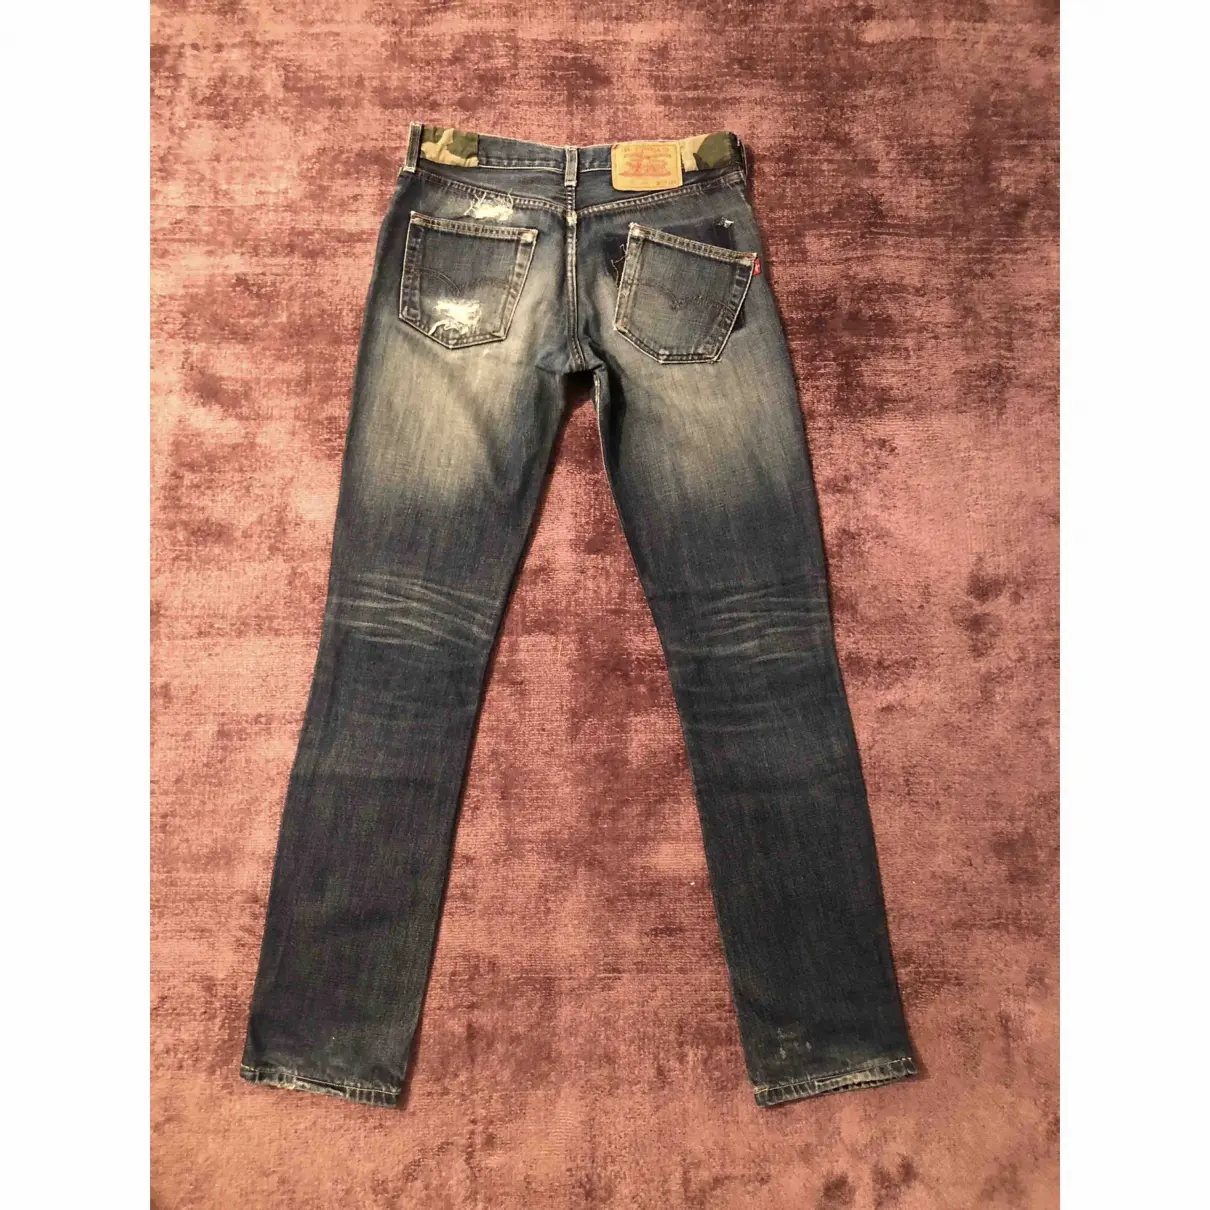 Buy Levi's Vintage Clothing Slim jean online - Vintage